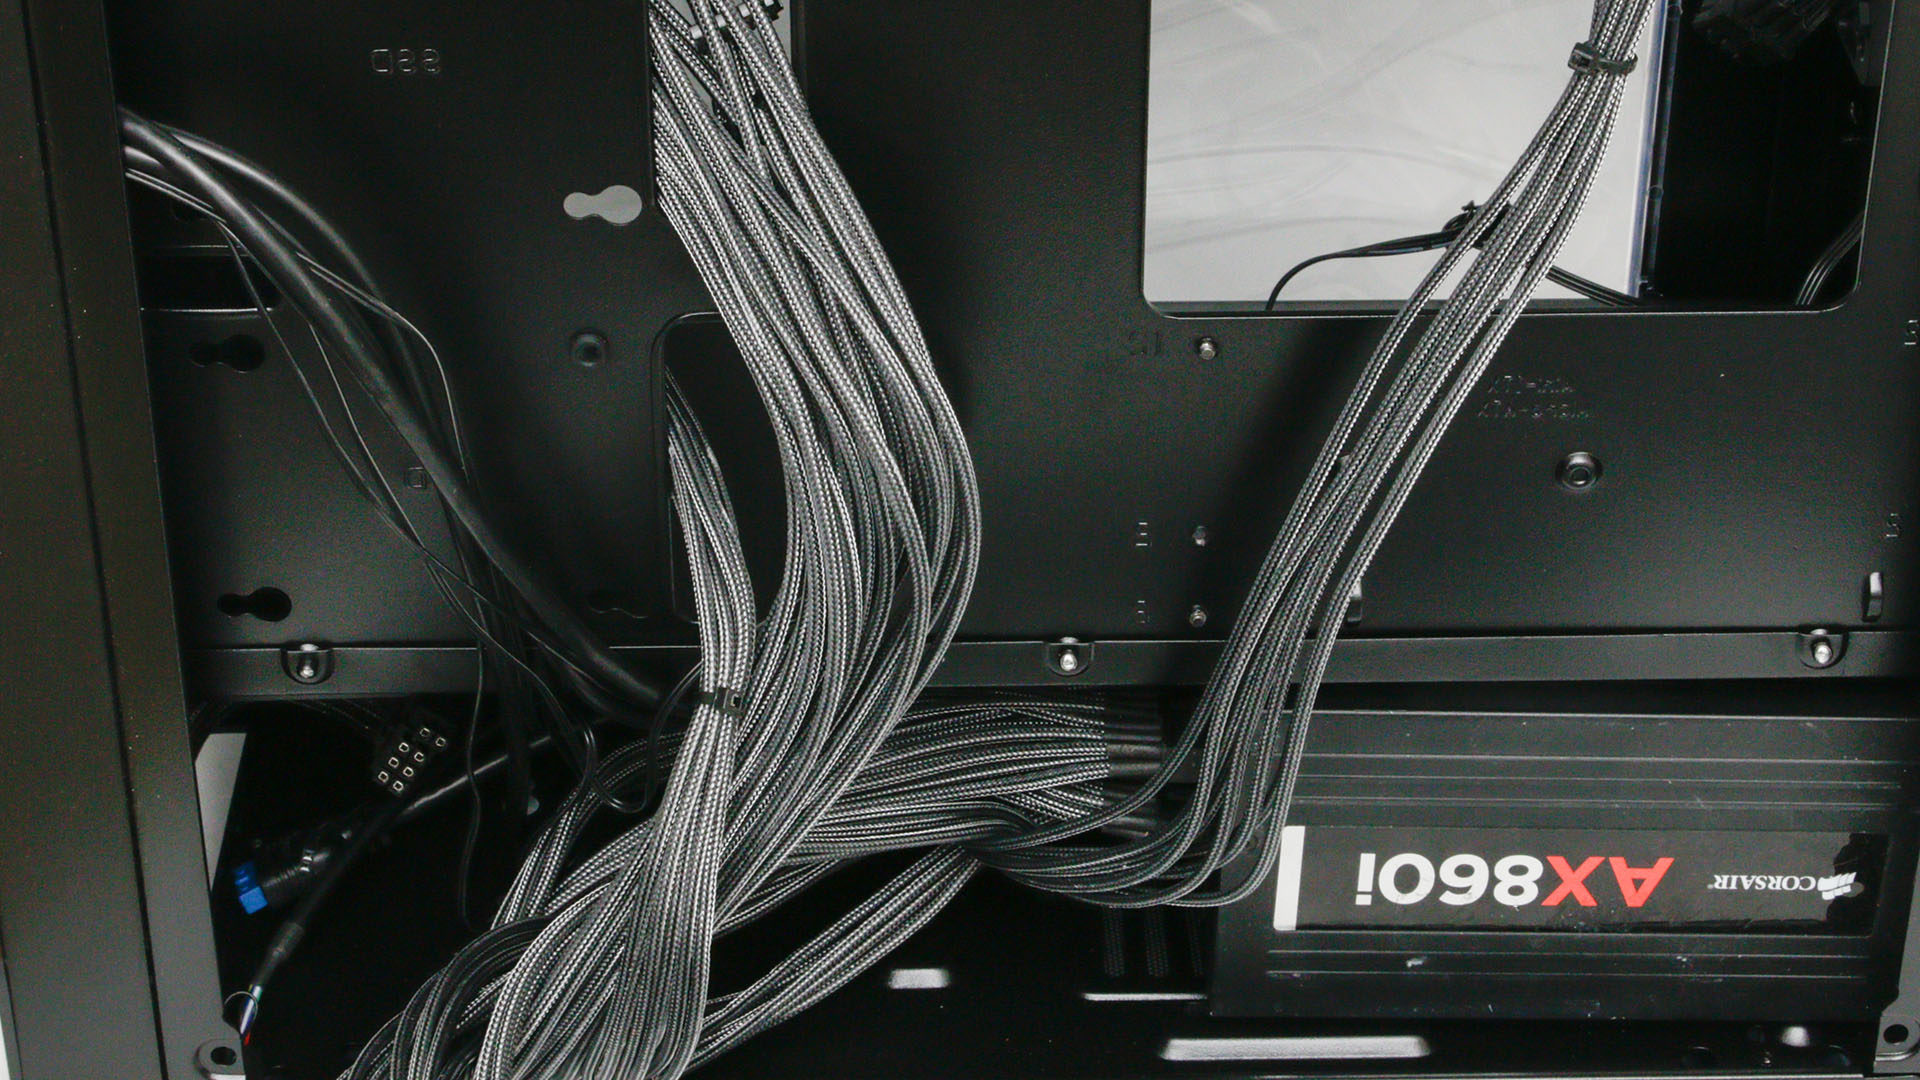 DIY Velcro PC cable ties